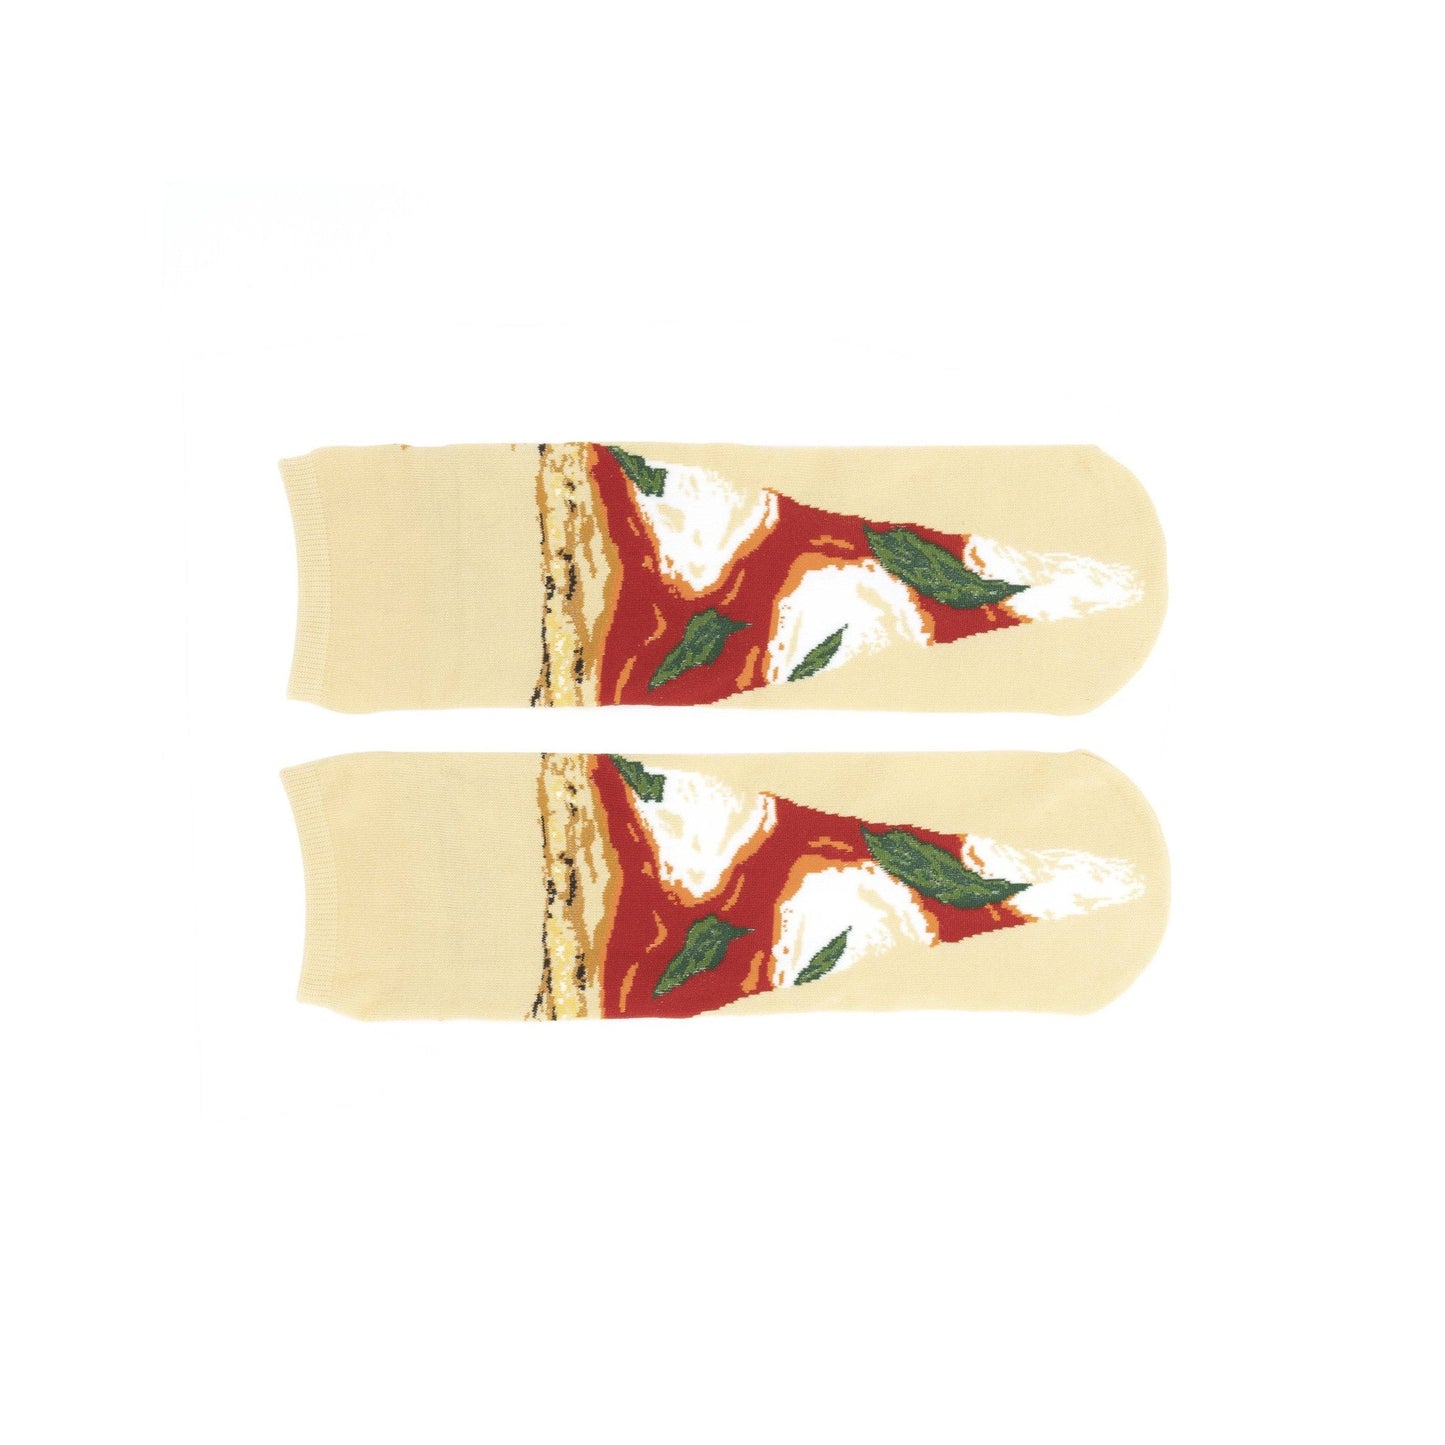 Margherita Pizza Socks | Funny Socks Folded Together Like Pizza for Gifting